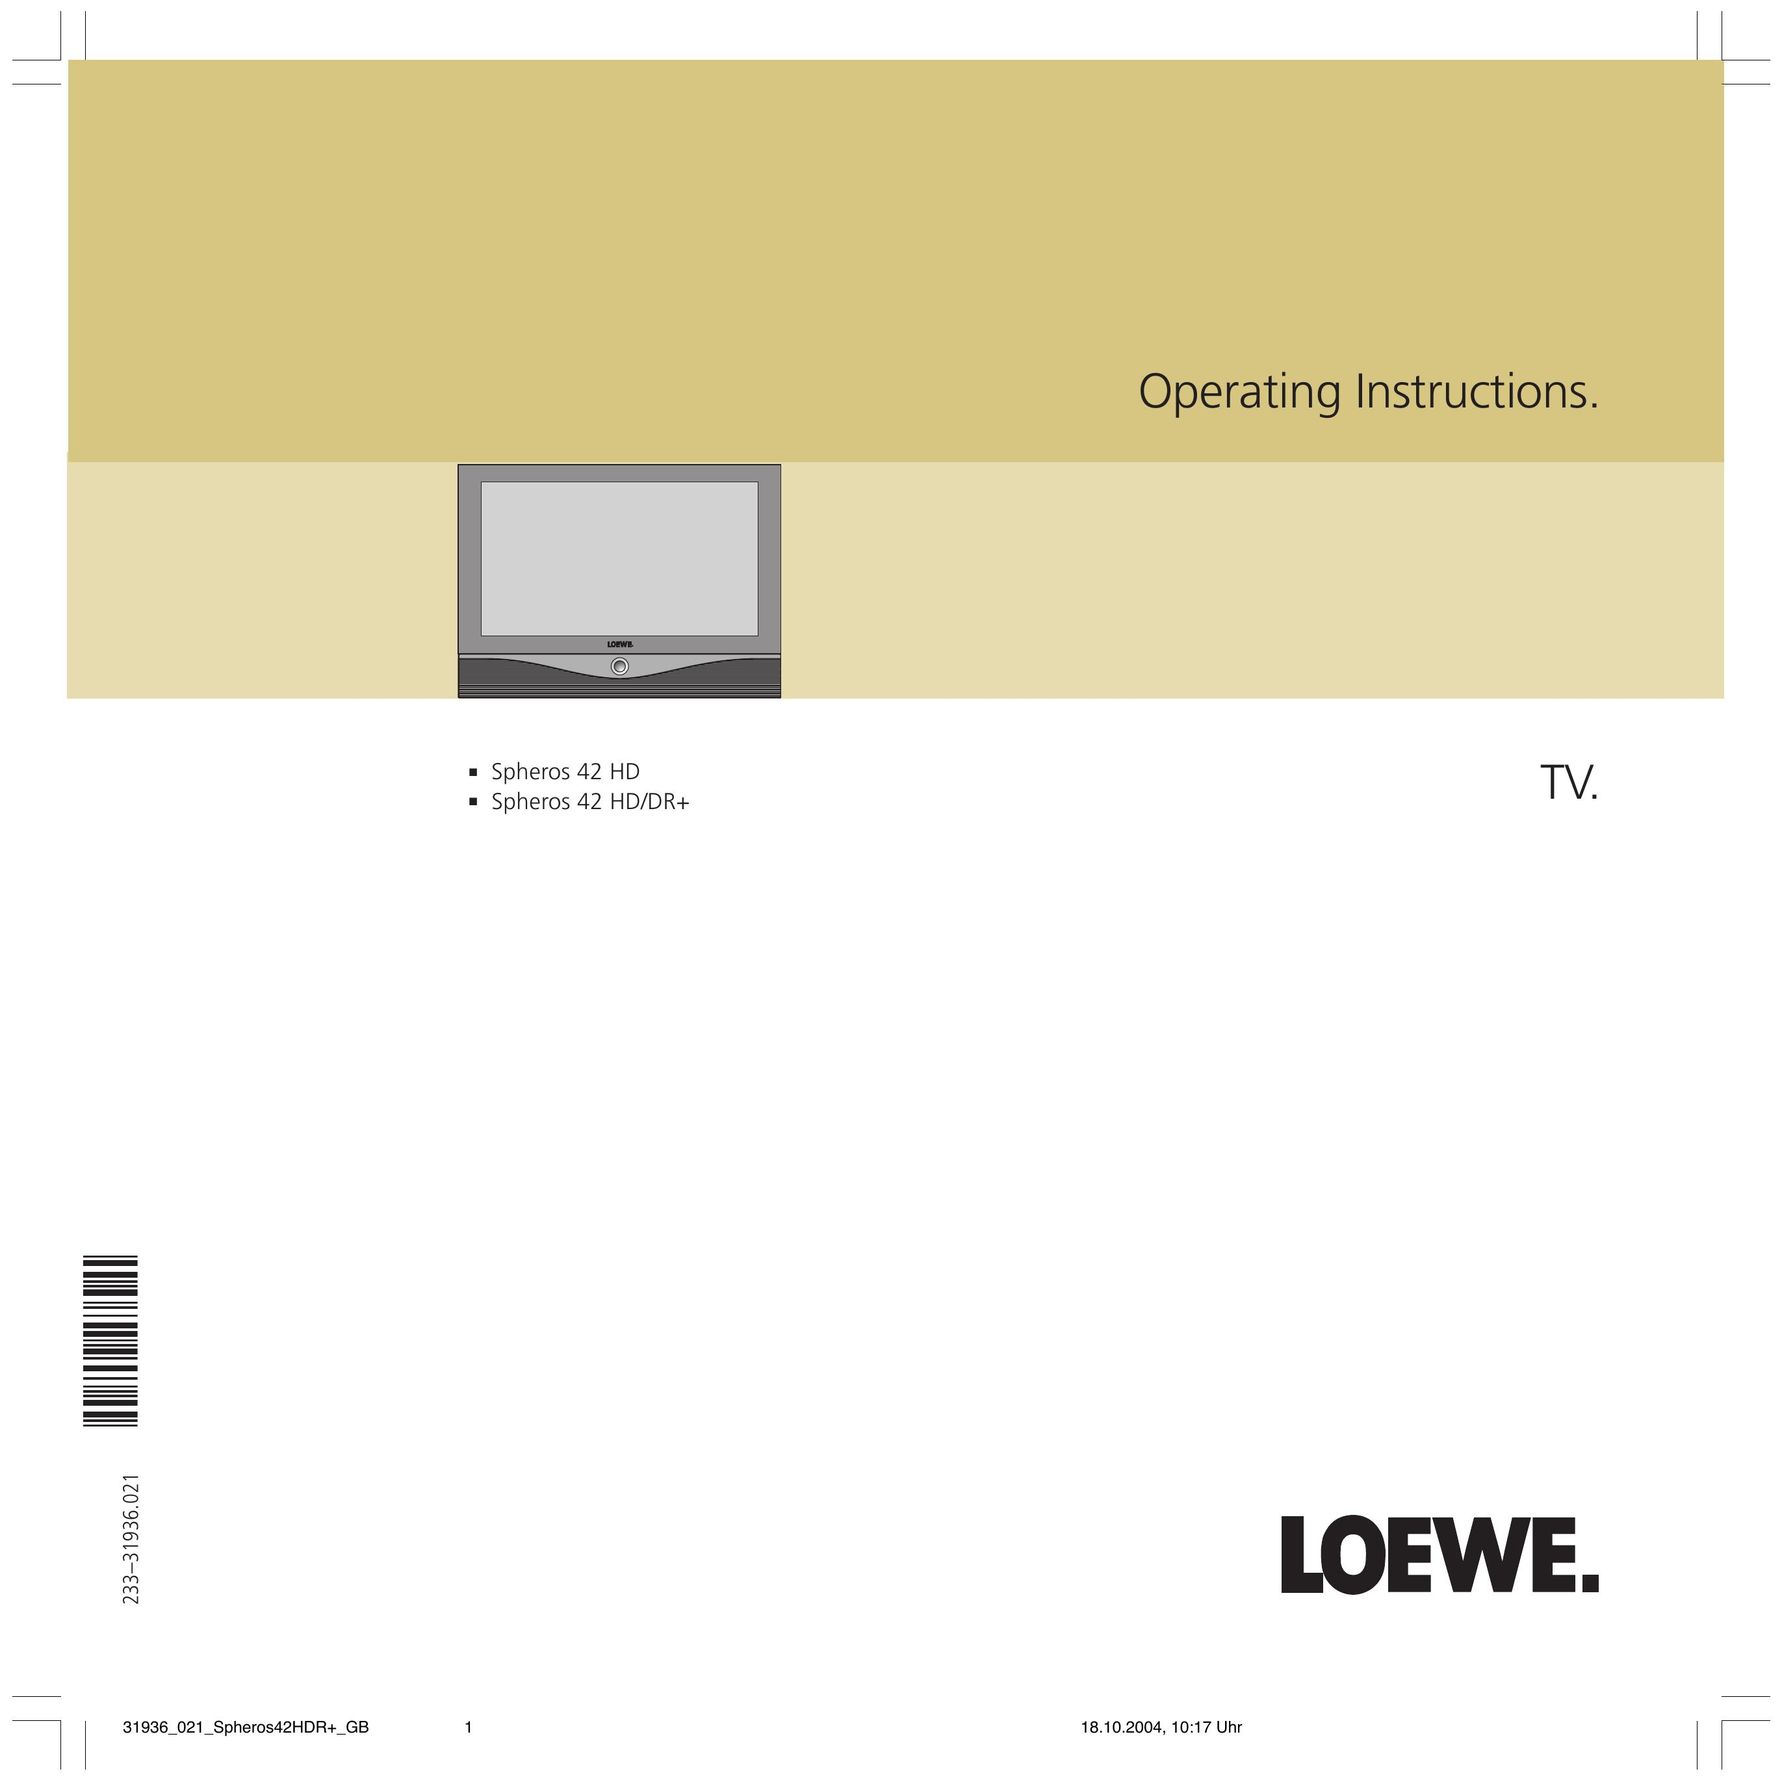 Loewe 42 HD/DR+ Flat Panel Television User Manual